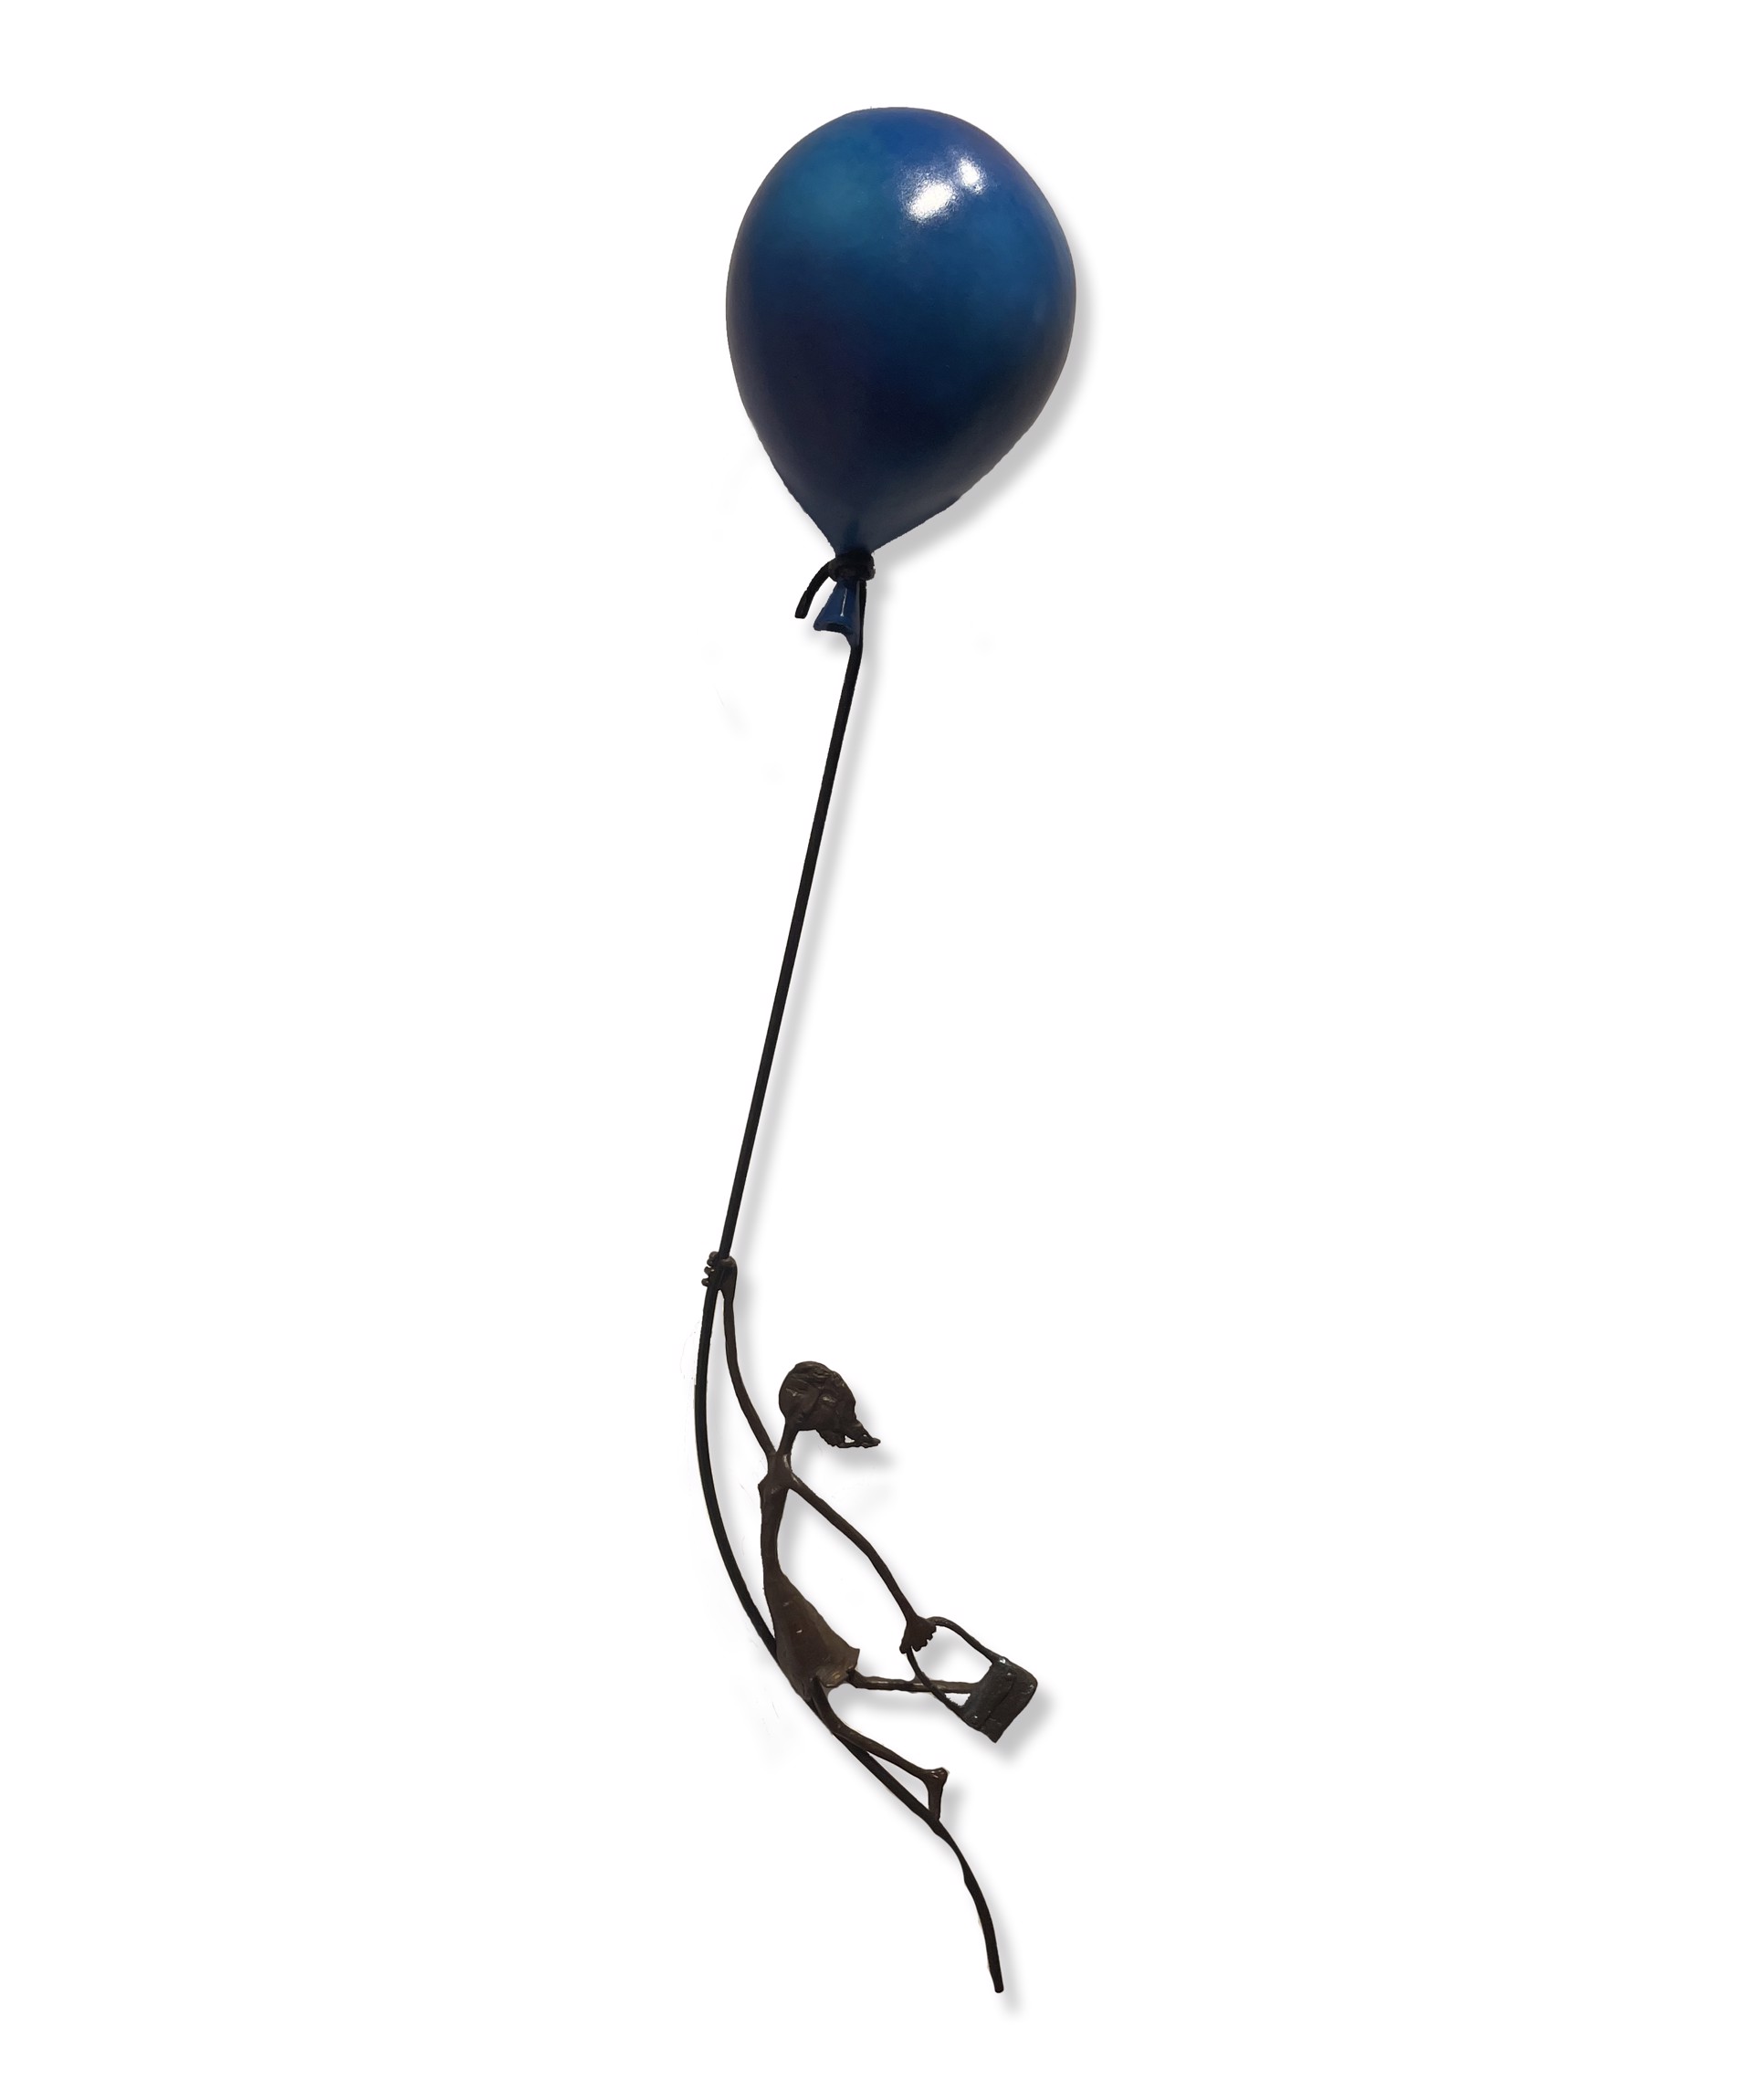 Blue Balloon by Ruth Bloch